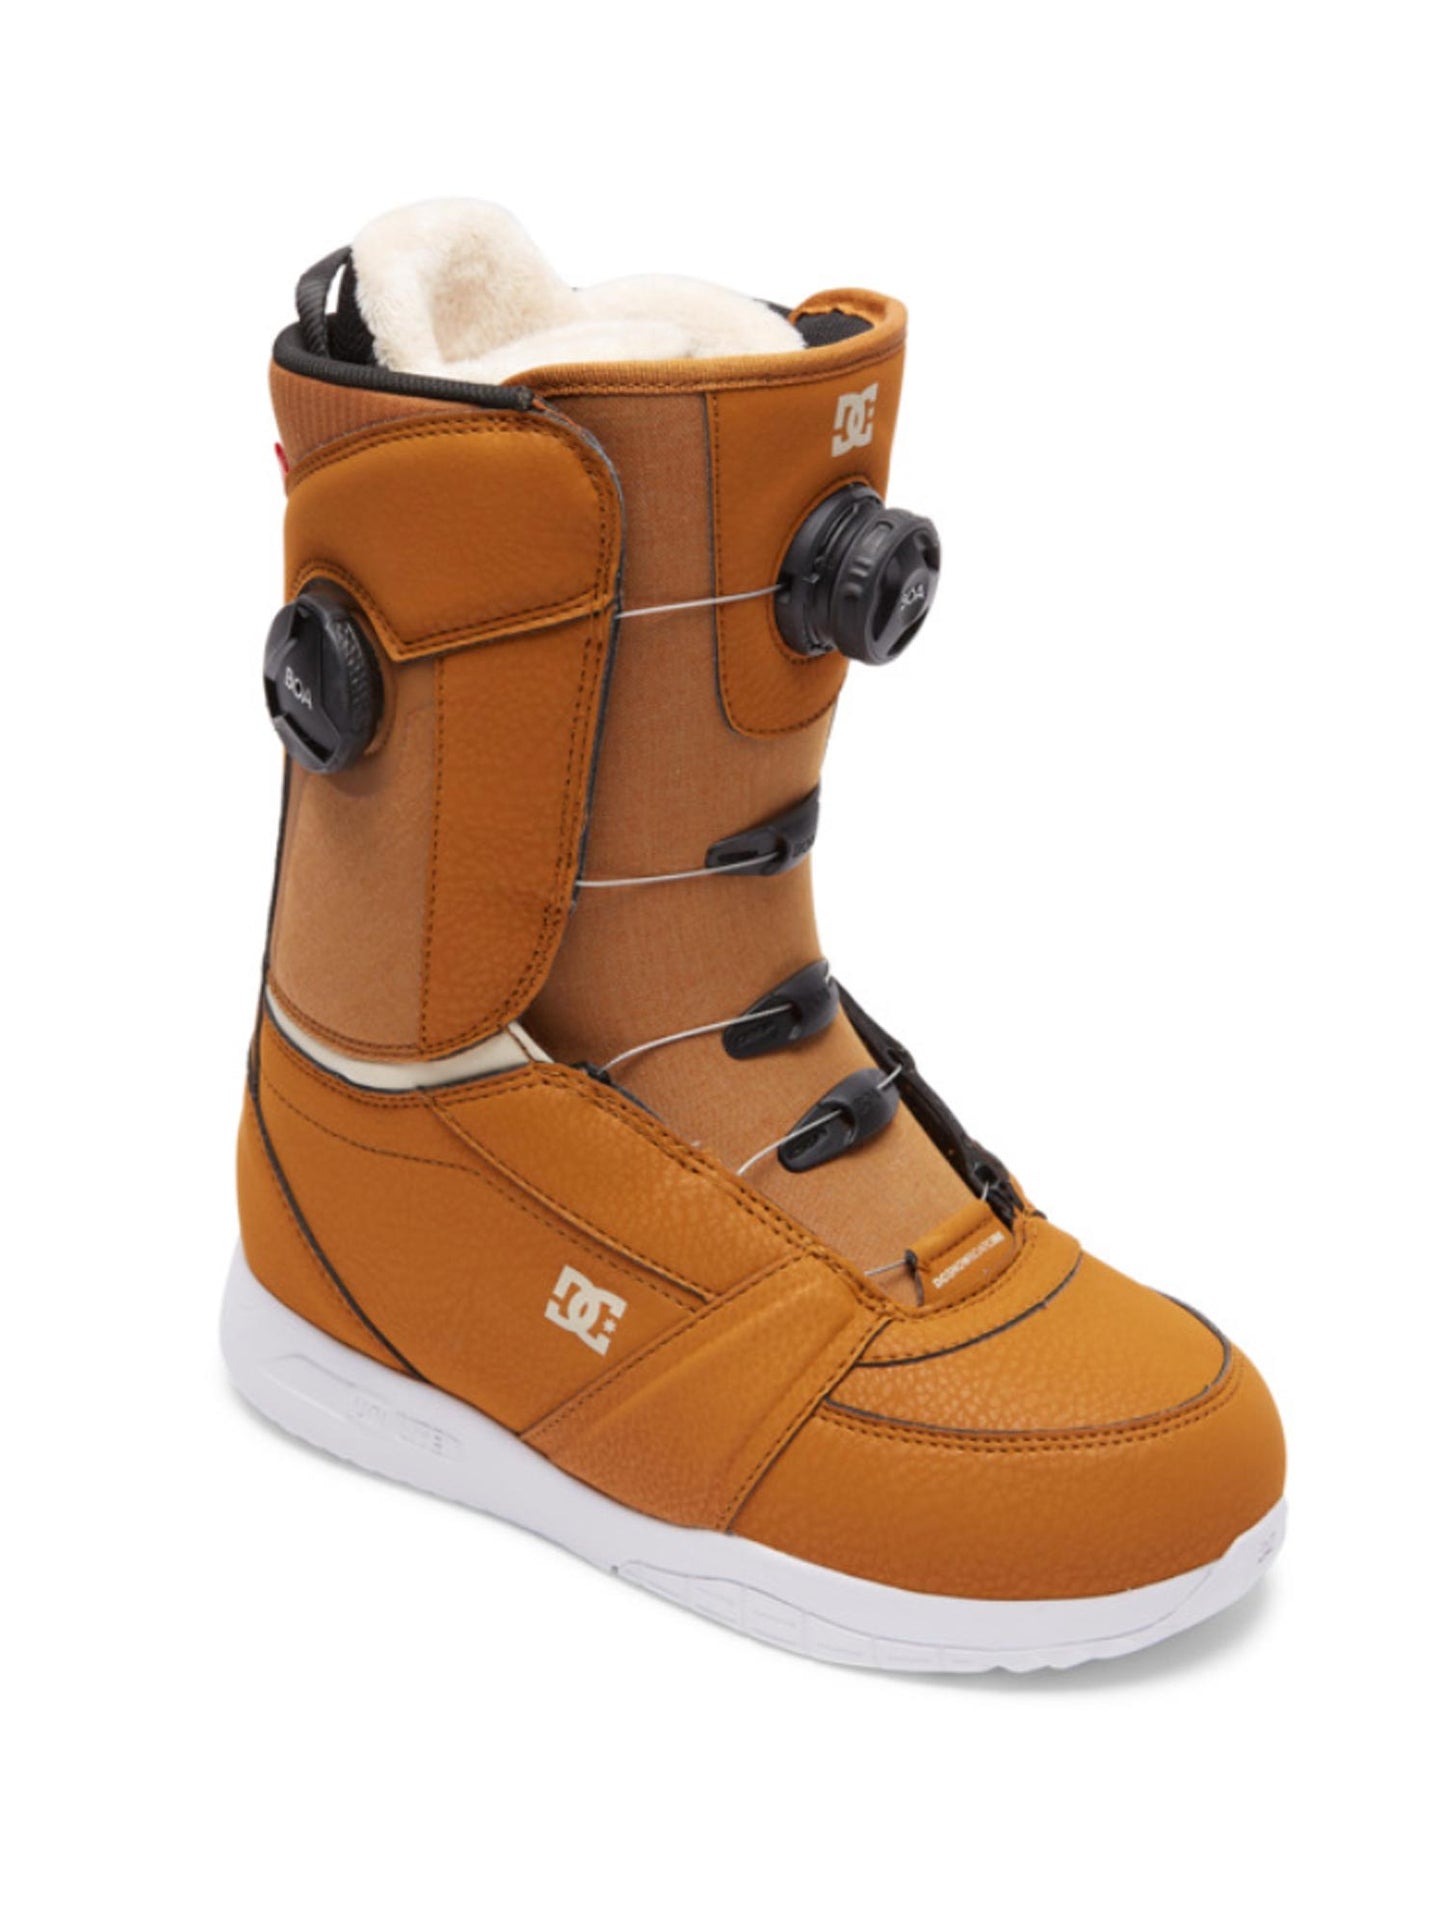 light brown snowboard boot